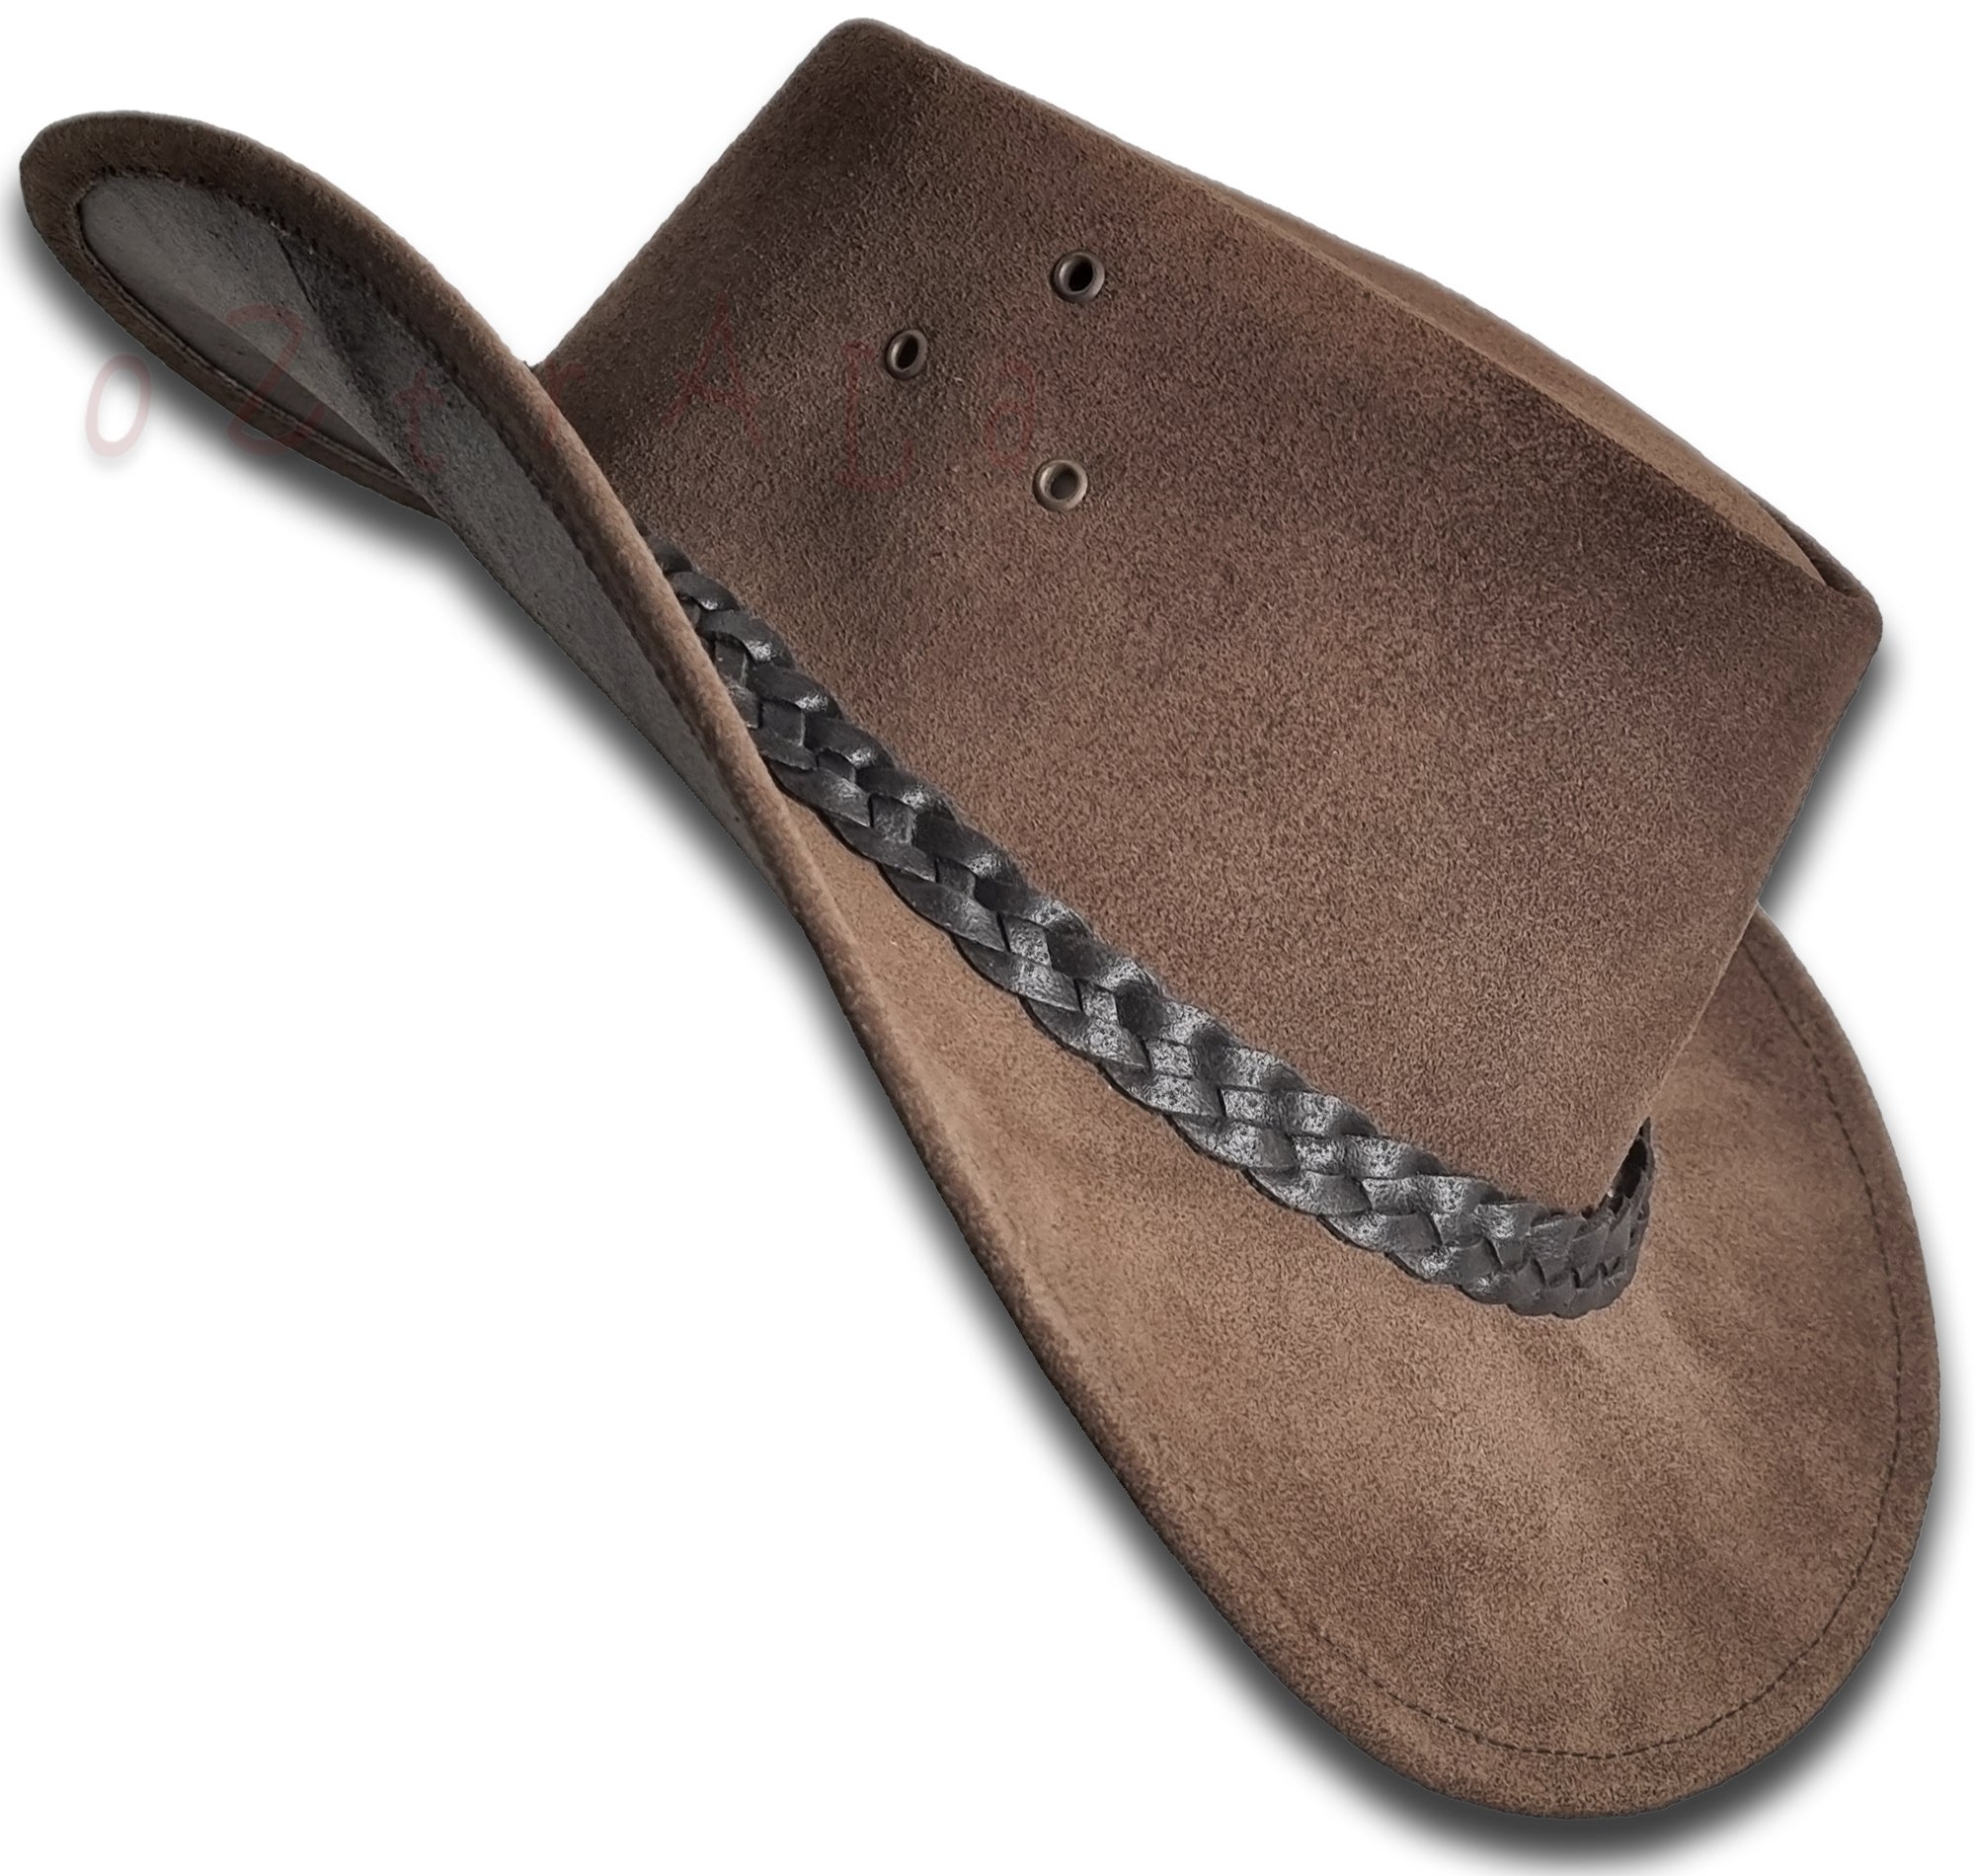 HAT oZtrALa Suede Leather Australian Outback Aussie Western Cowboy Men